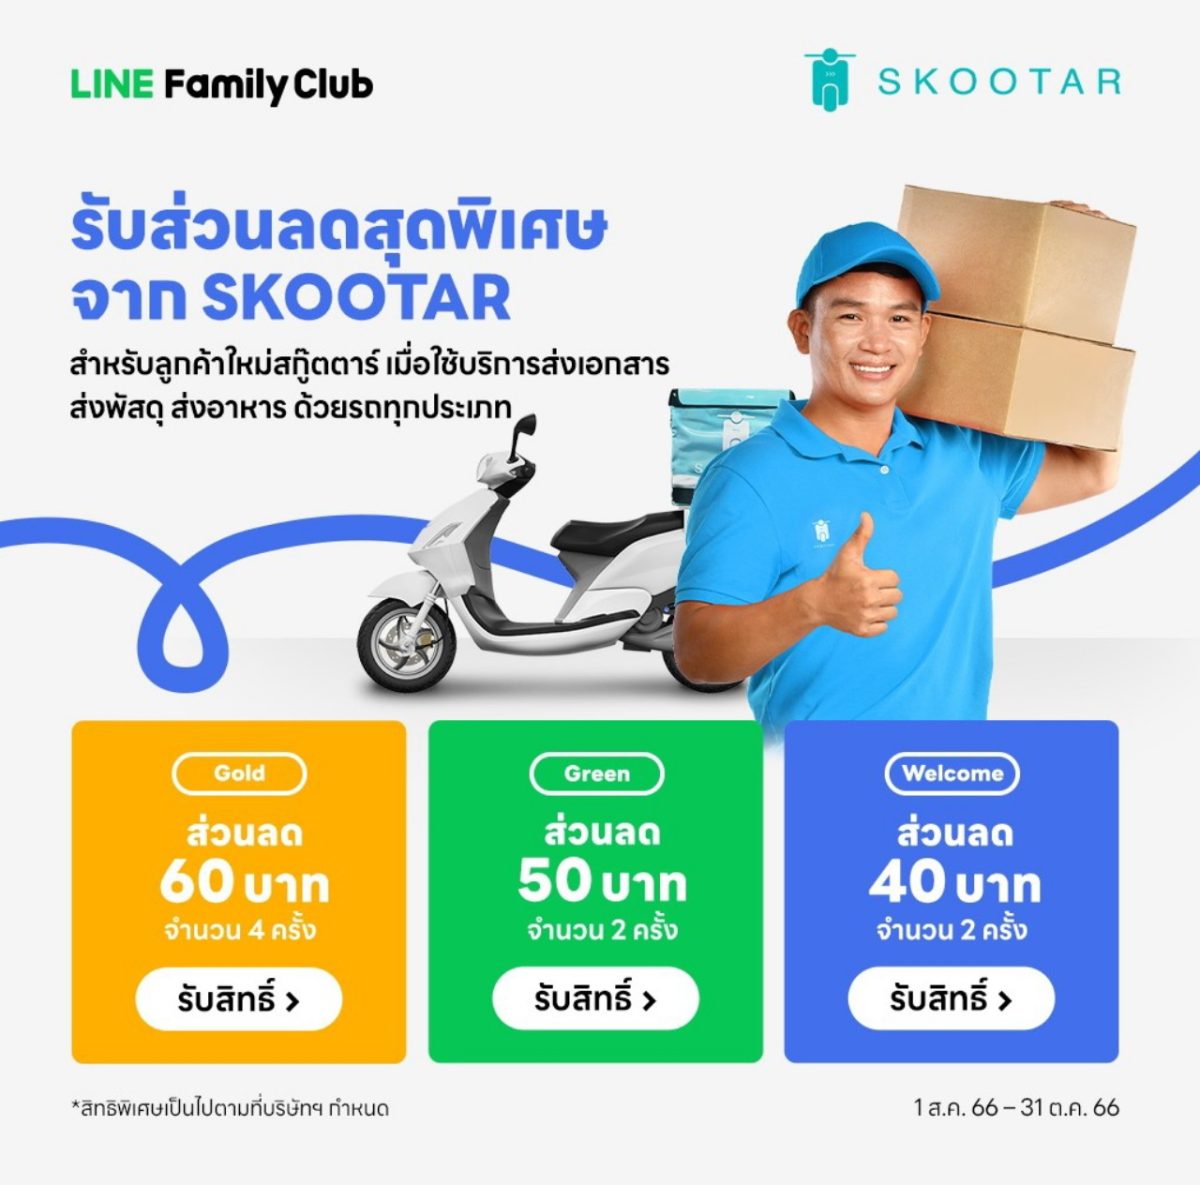 Skootar Line Family CLUB